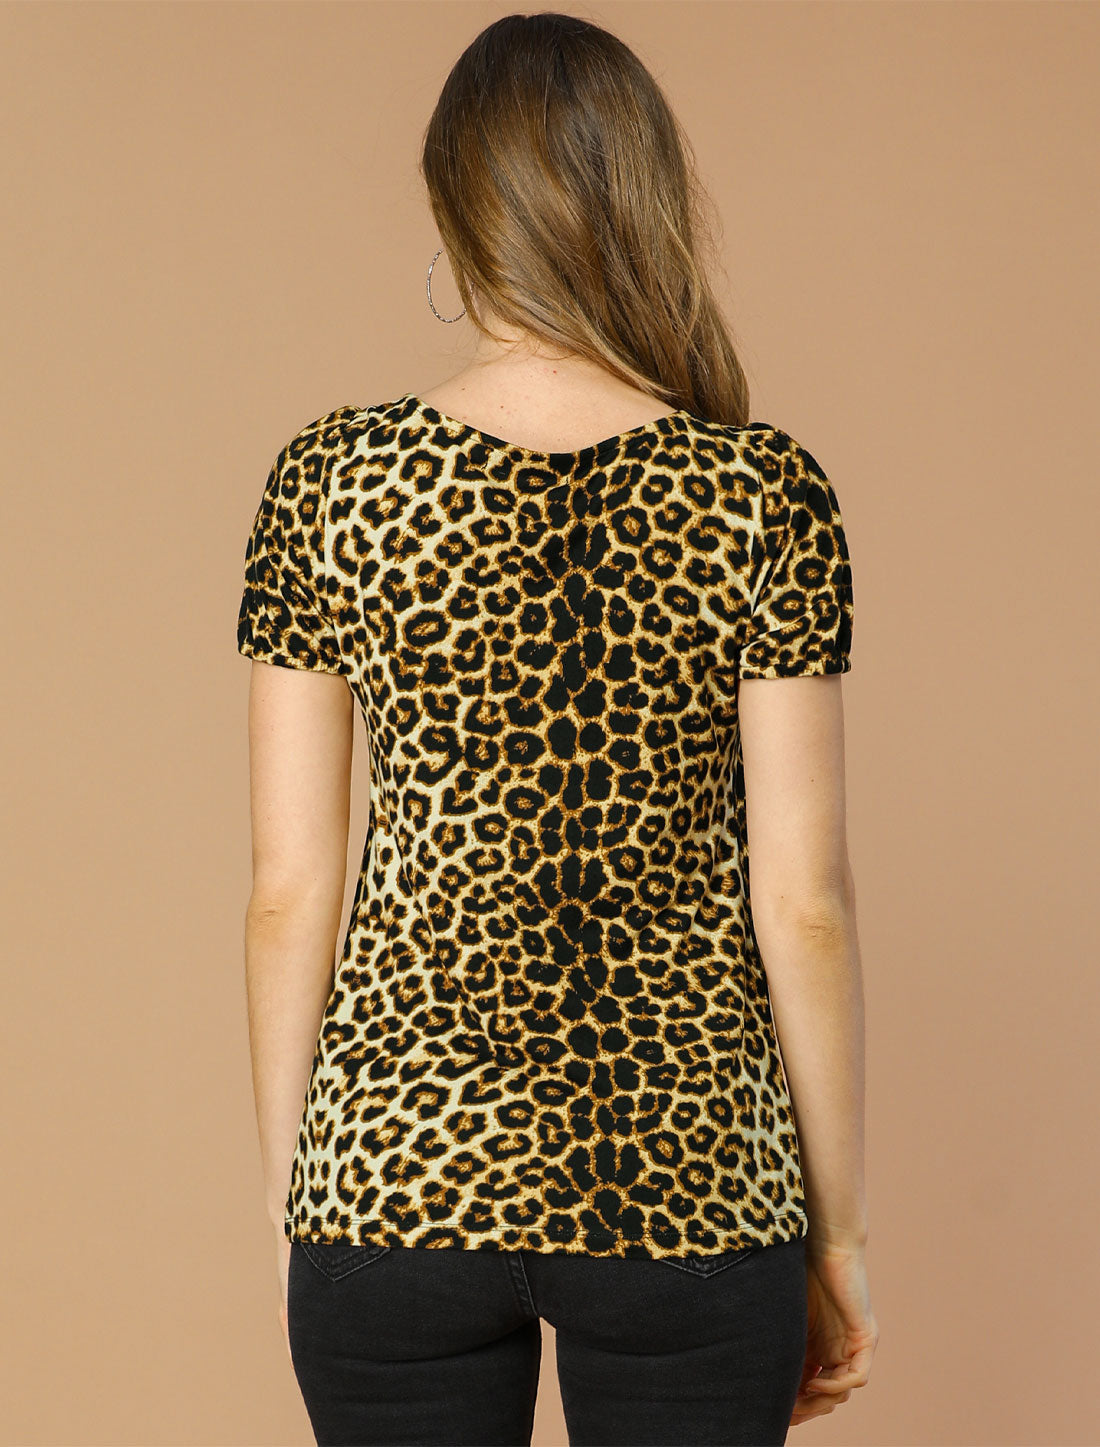 Allegra K Animal Print Top Short Sleeve Pleated U-neck Knit Leopard T-shirt